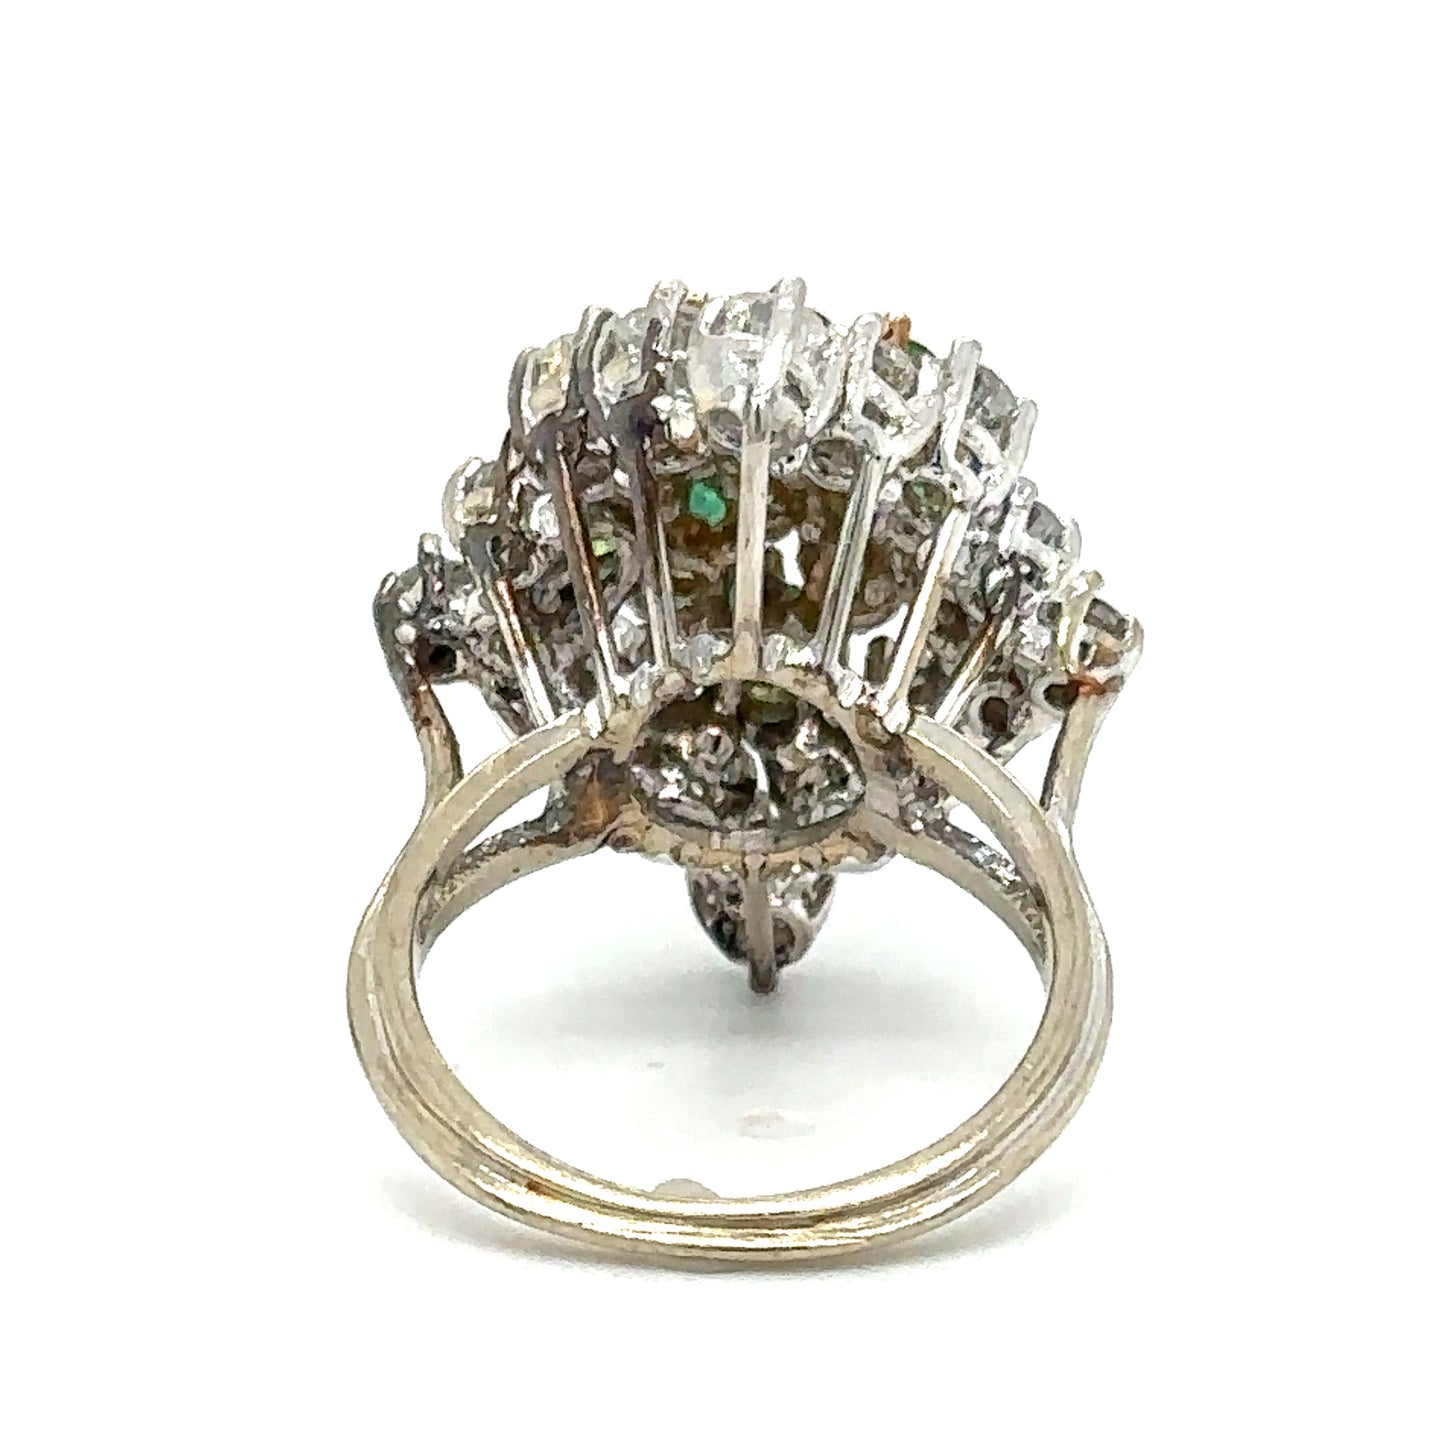 Circa 1950s Retro Emerald and Diamond Cocktail Ring in 14K White Gold